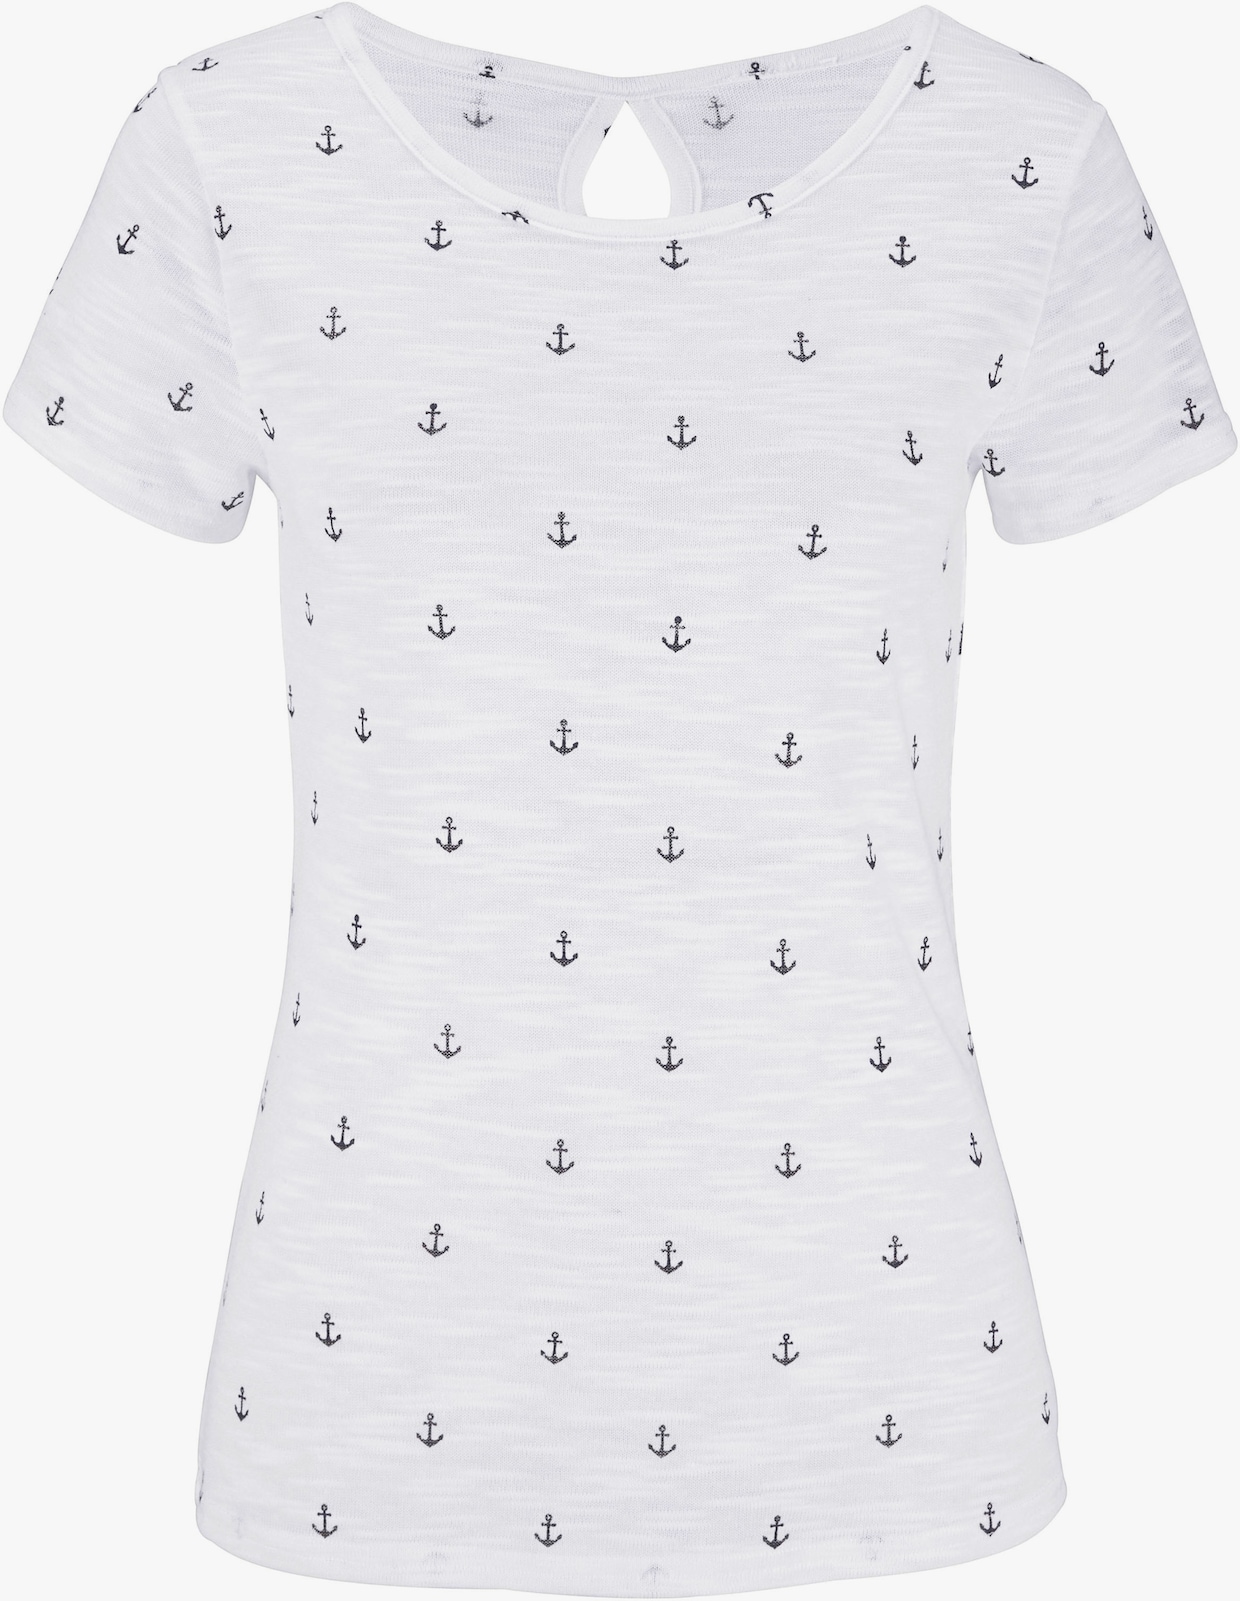 Beachtime T-Shirt - marine, weiß